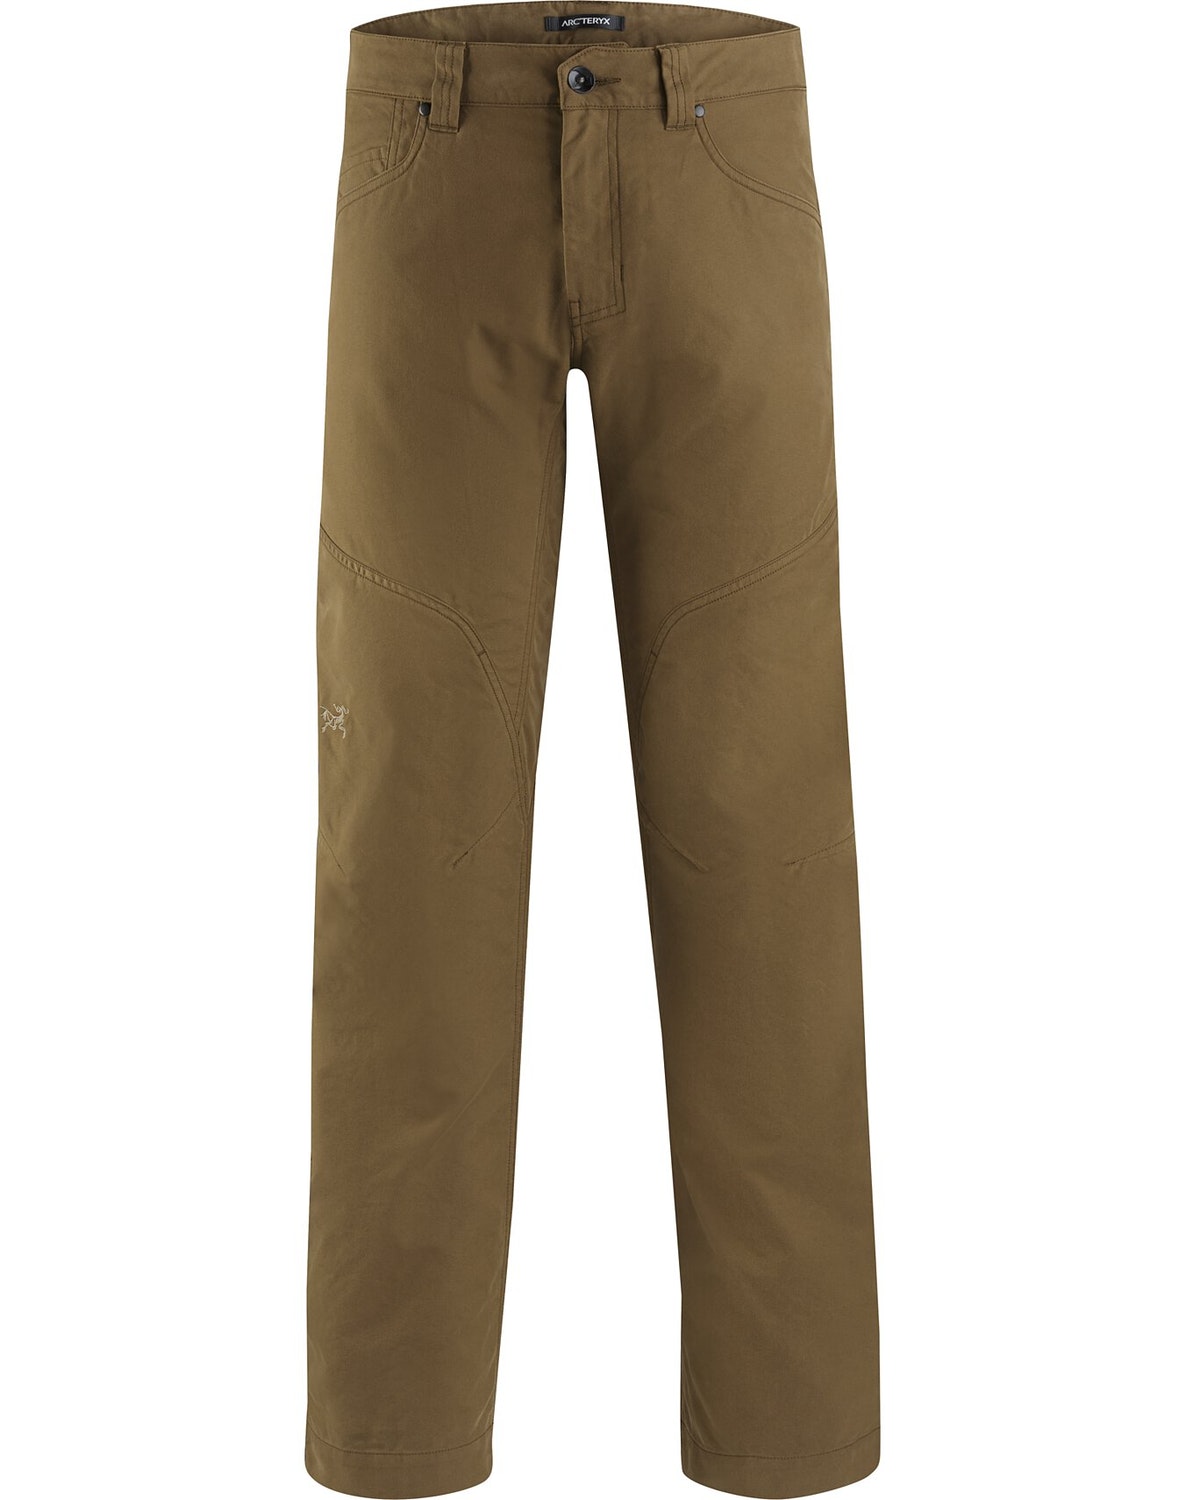 Pantaloni Arc'teryx Cronin Uomo khaki - IT-9533913